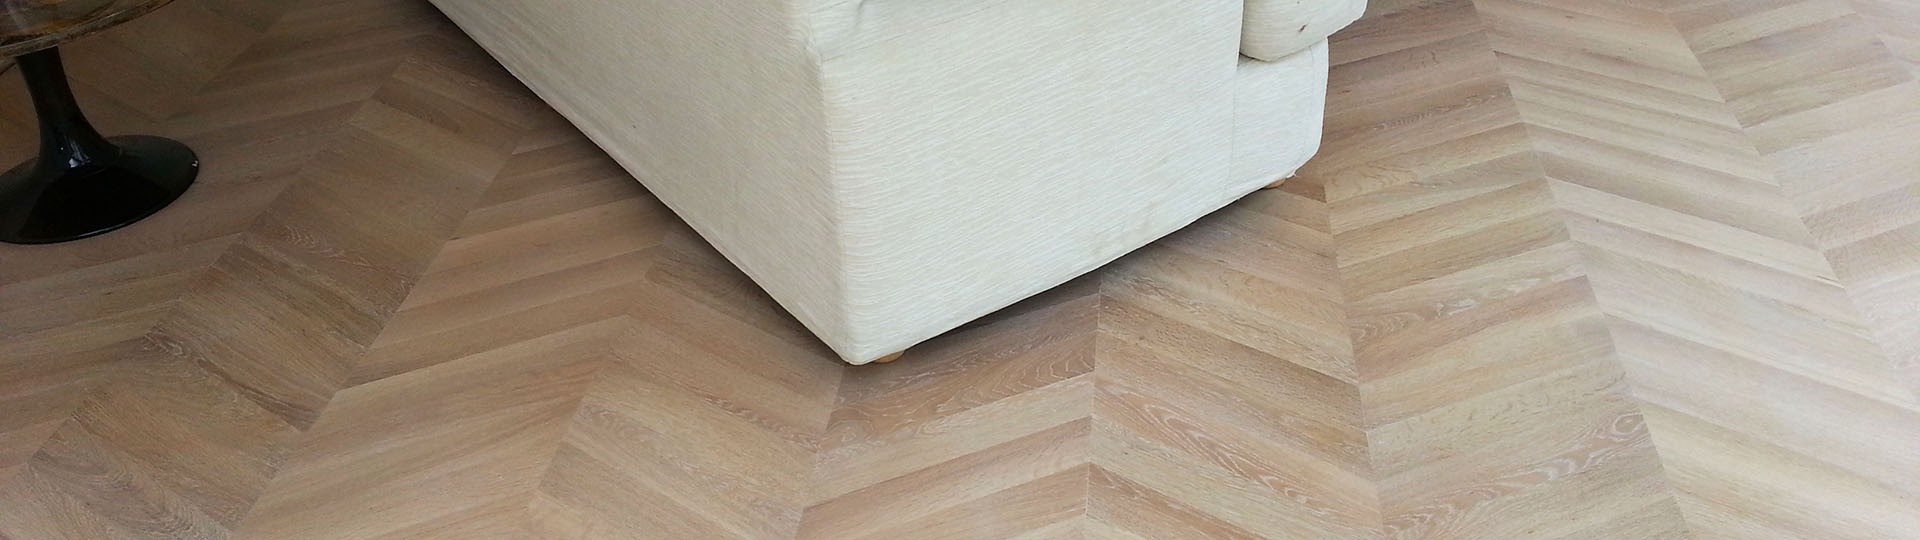 Fitting Parquet Flooring Professional Service Luxury Wood Flooring